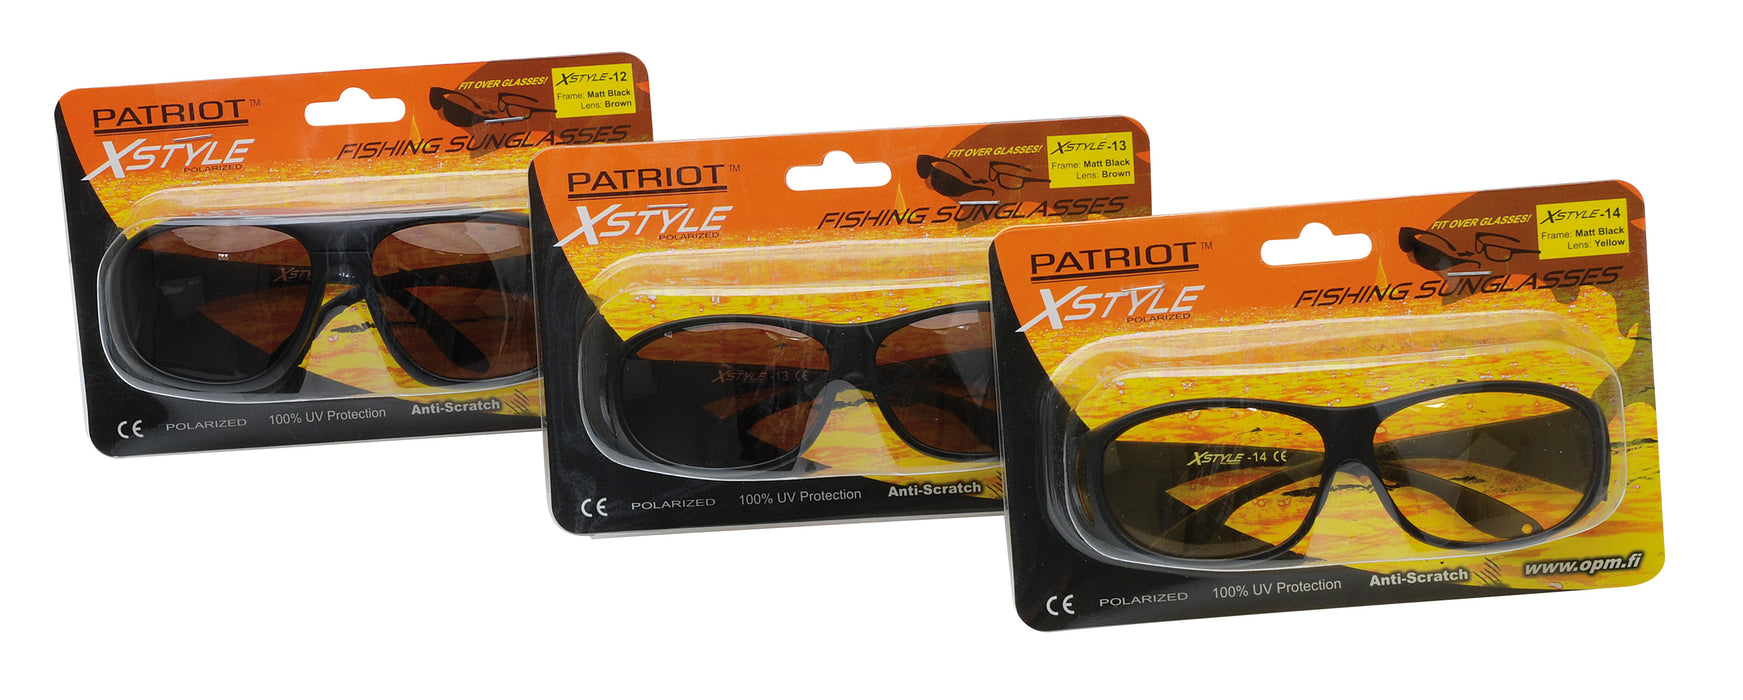 Patriot XST-14 sunglasses, Yellow lens